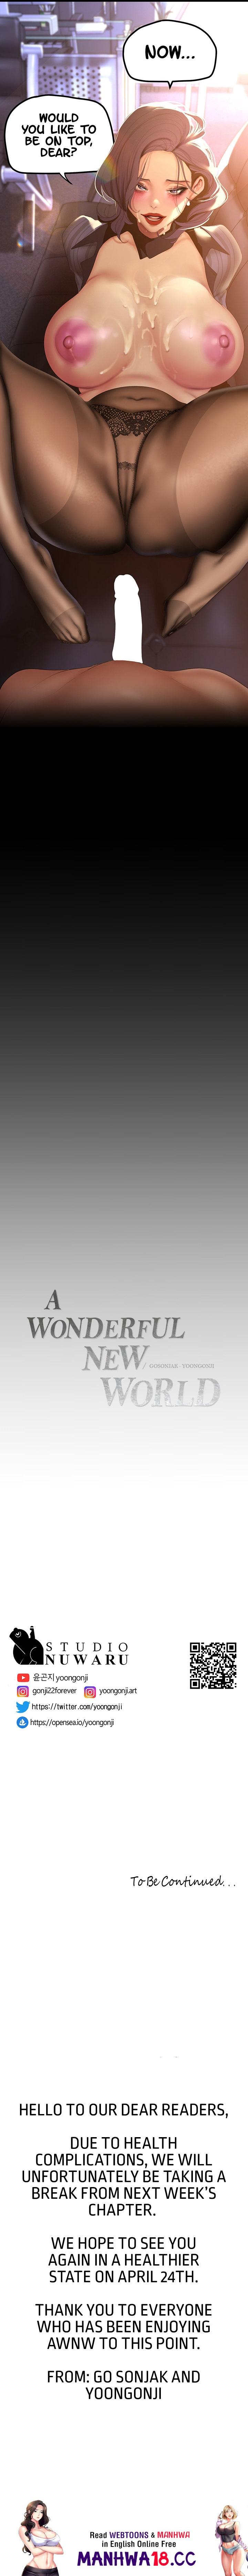 A Wonderful New World - Chapter 185 Page 17